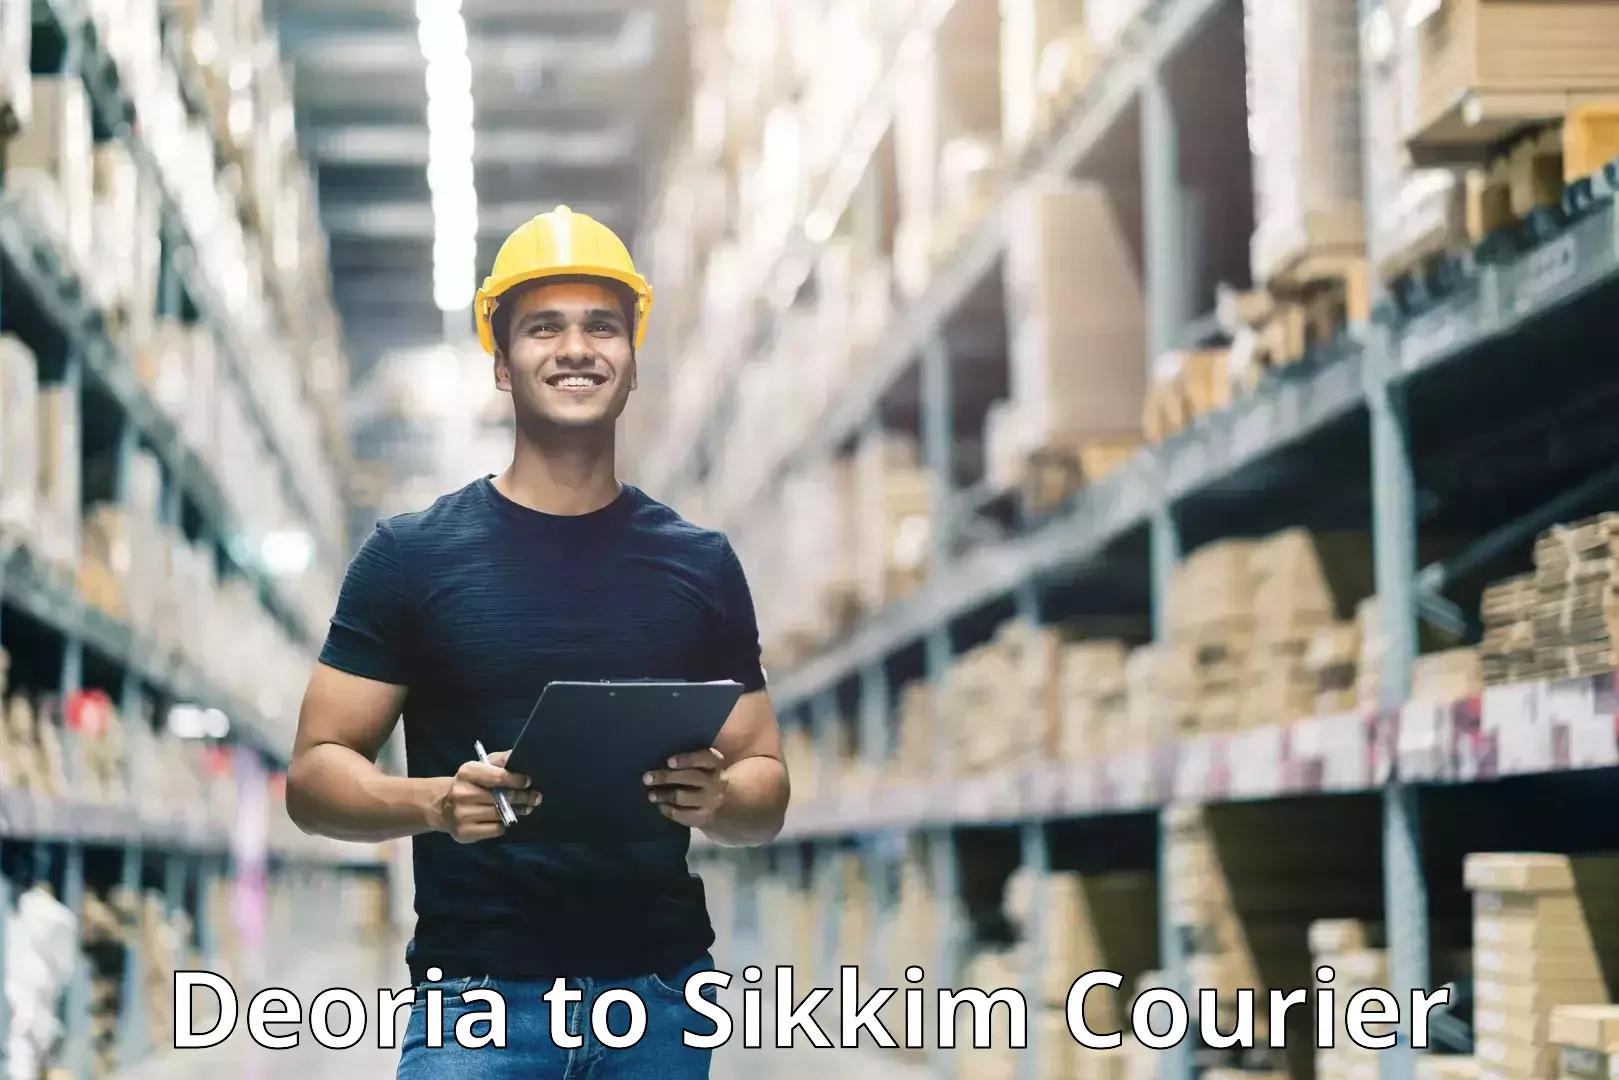 Courier service comparison in Deoria to Sikkim